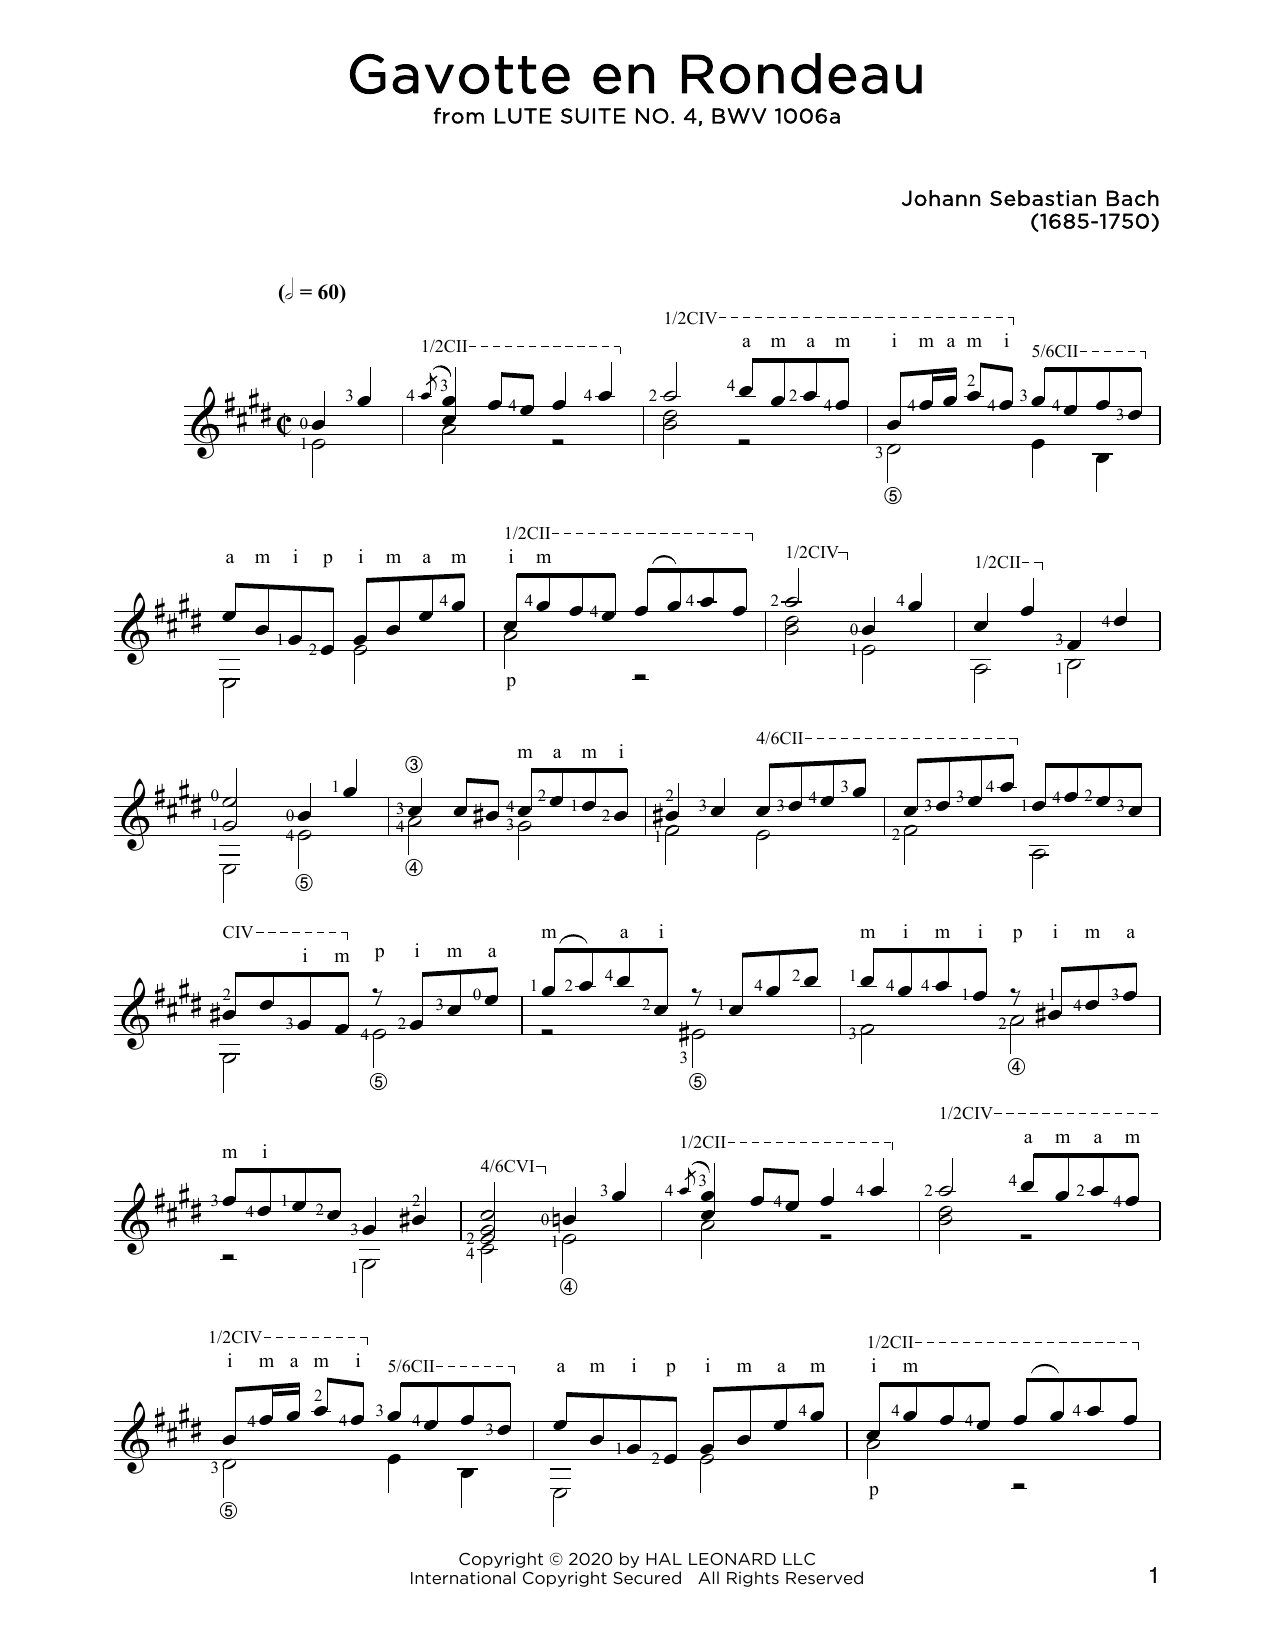 Johann Sebastian Bach Gavotte En Rondeau Sheet Music Notes & Chords for Solo Guitar - Download or Print PDF